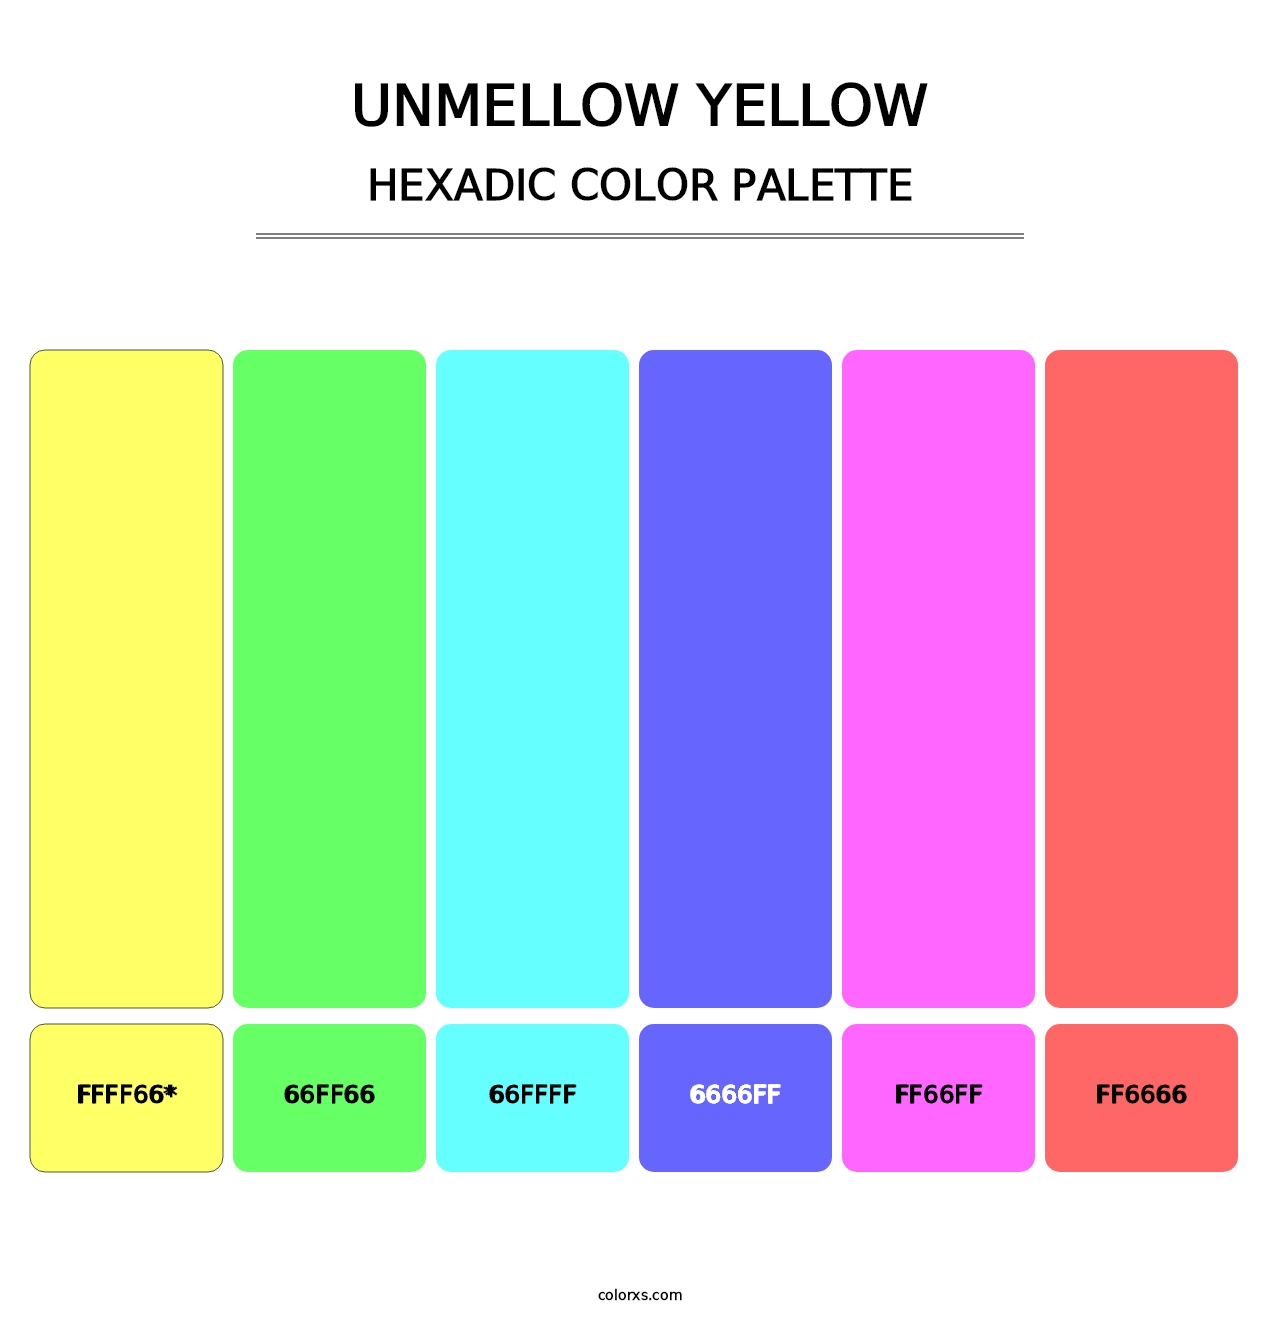 Unmellow Yellow - Hexadic Color Palette